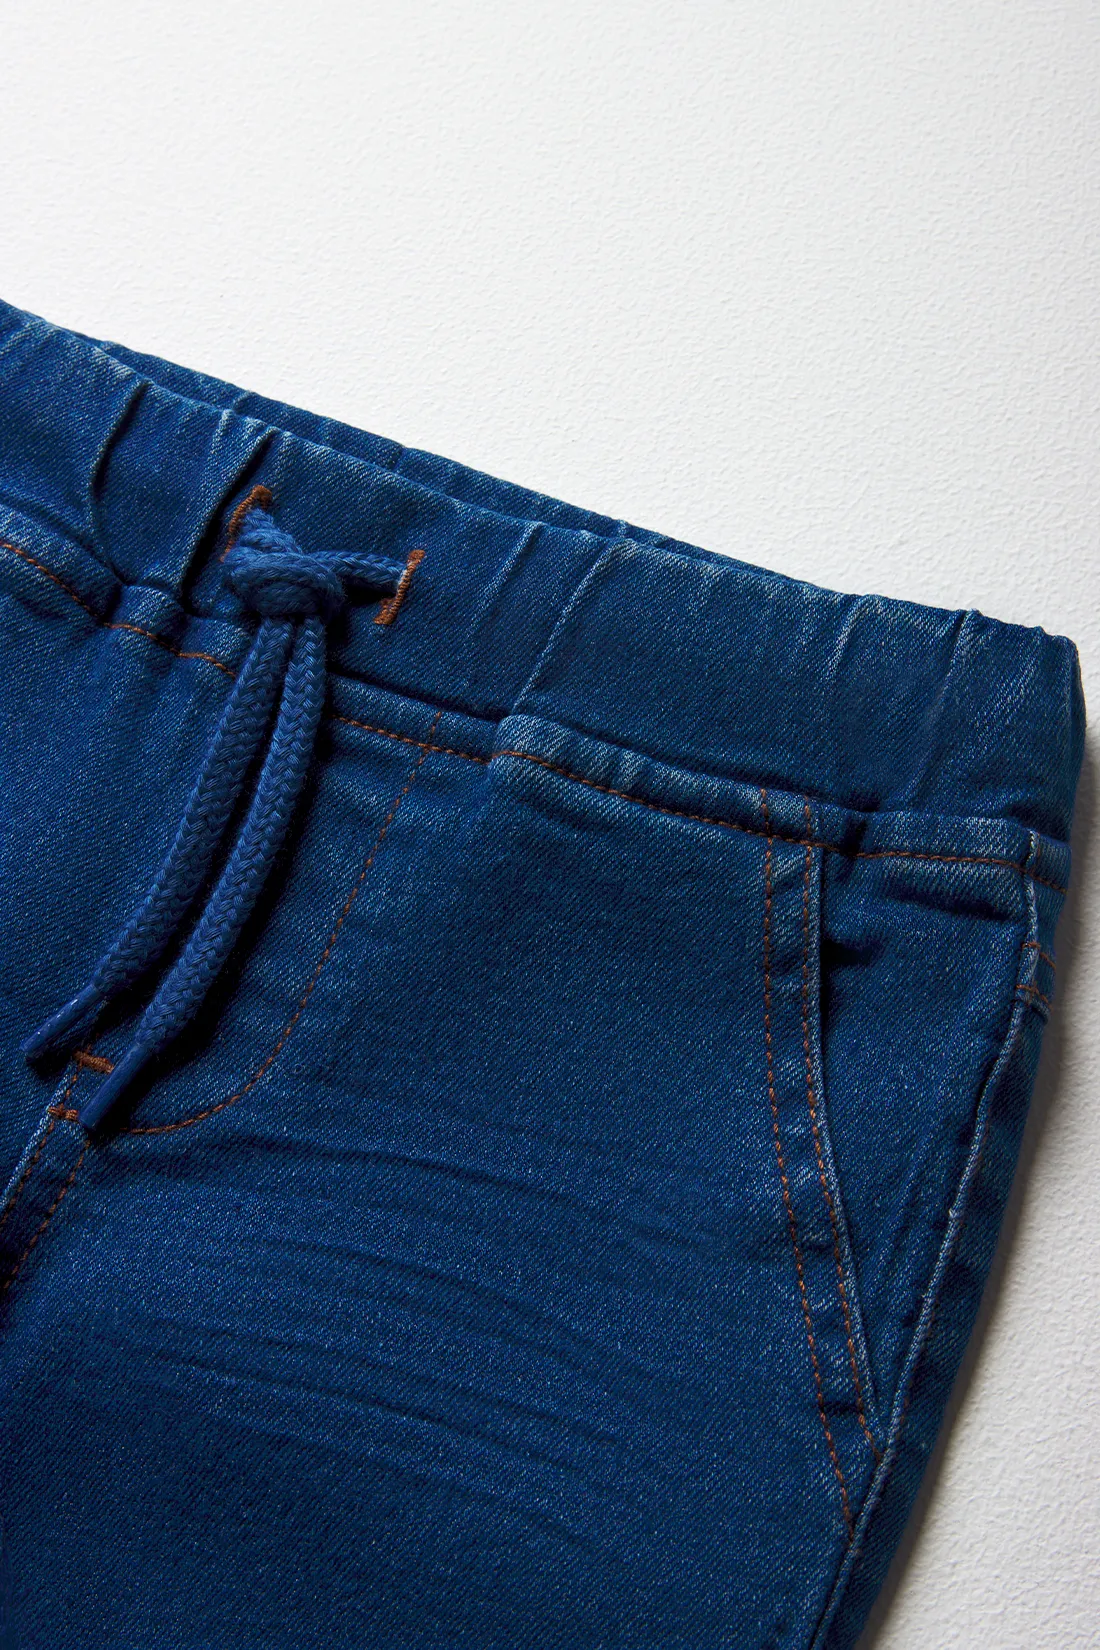 Pull on denim shorts blue - BOYS 2-8 YEARS Bottoms & Jeans | Ackermans